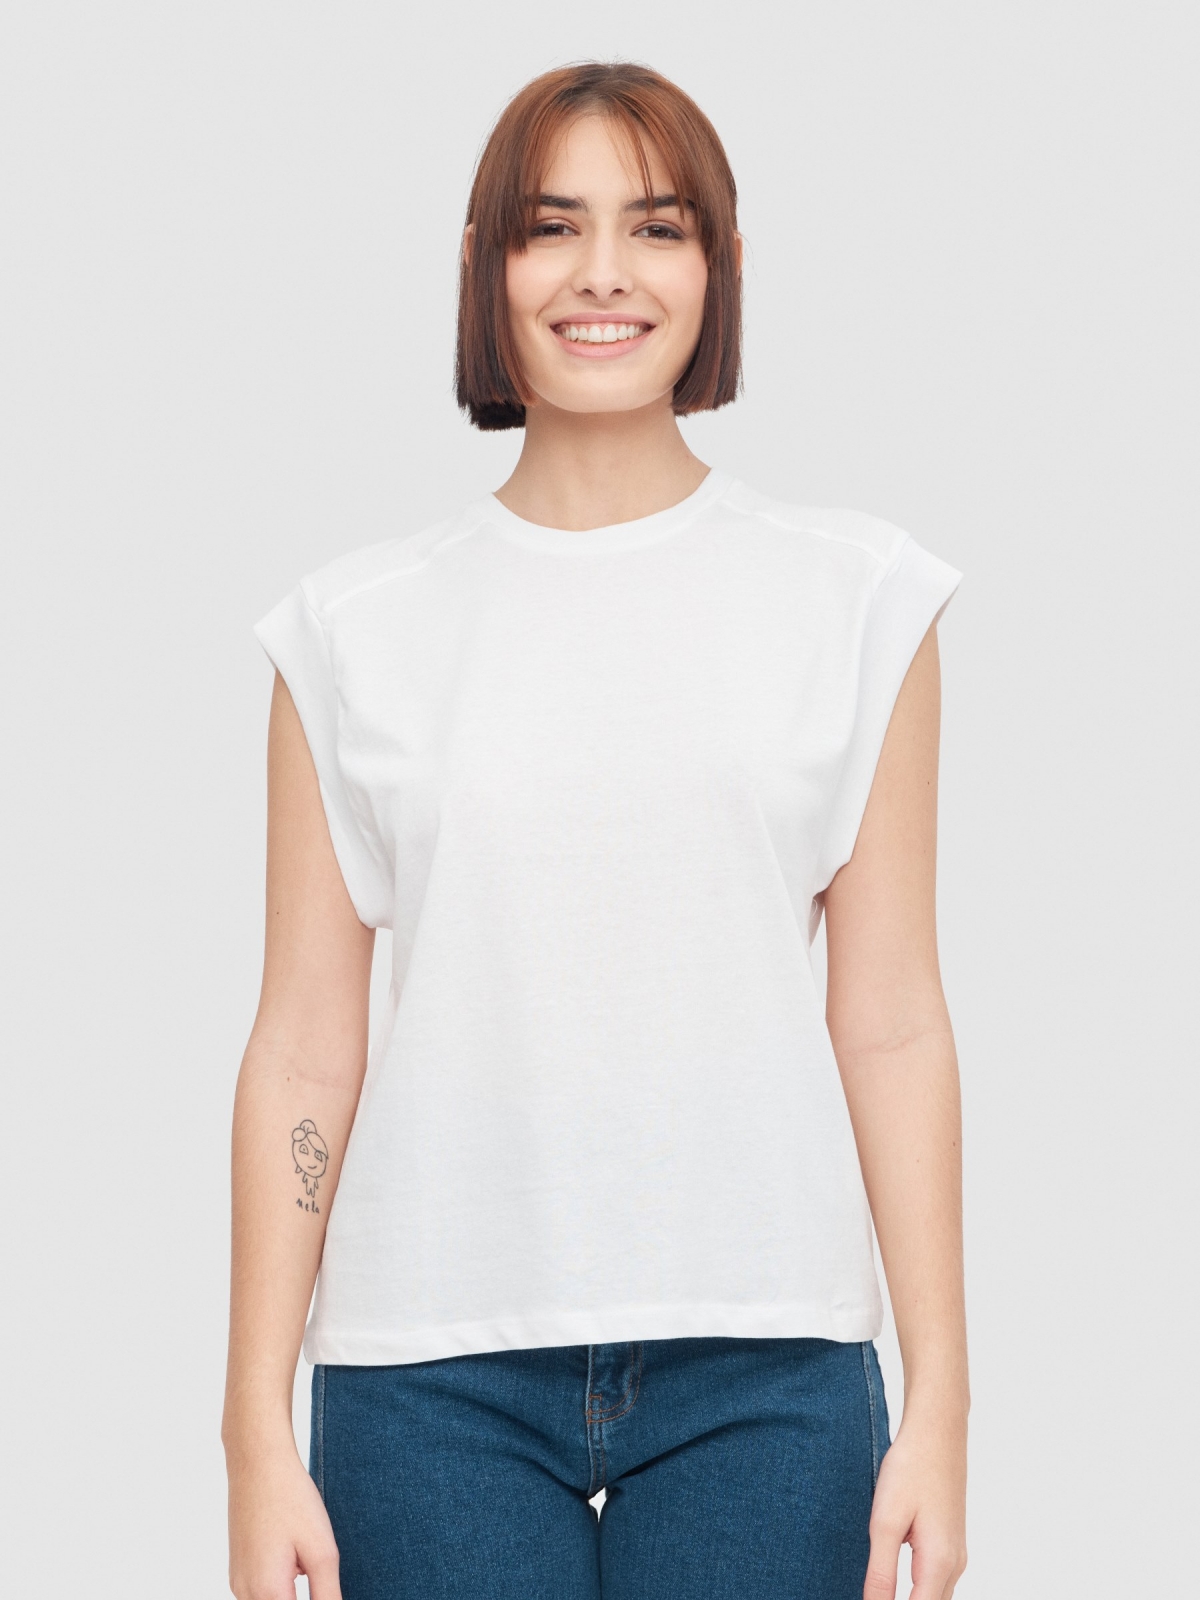 Camiseta rib sin mangas blanco vista media frontal